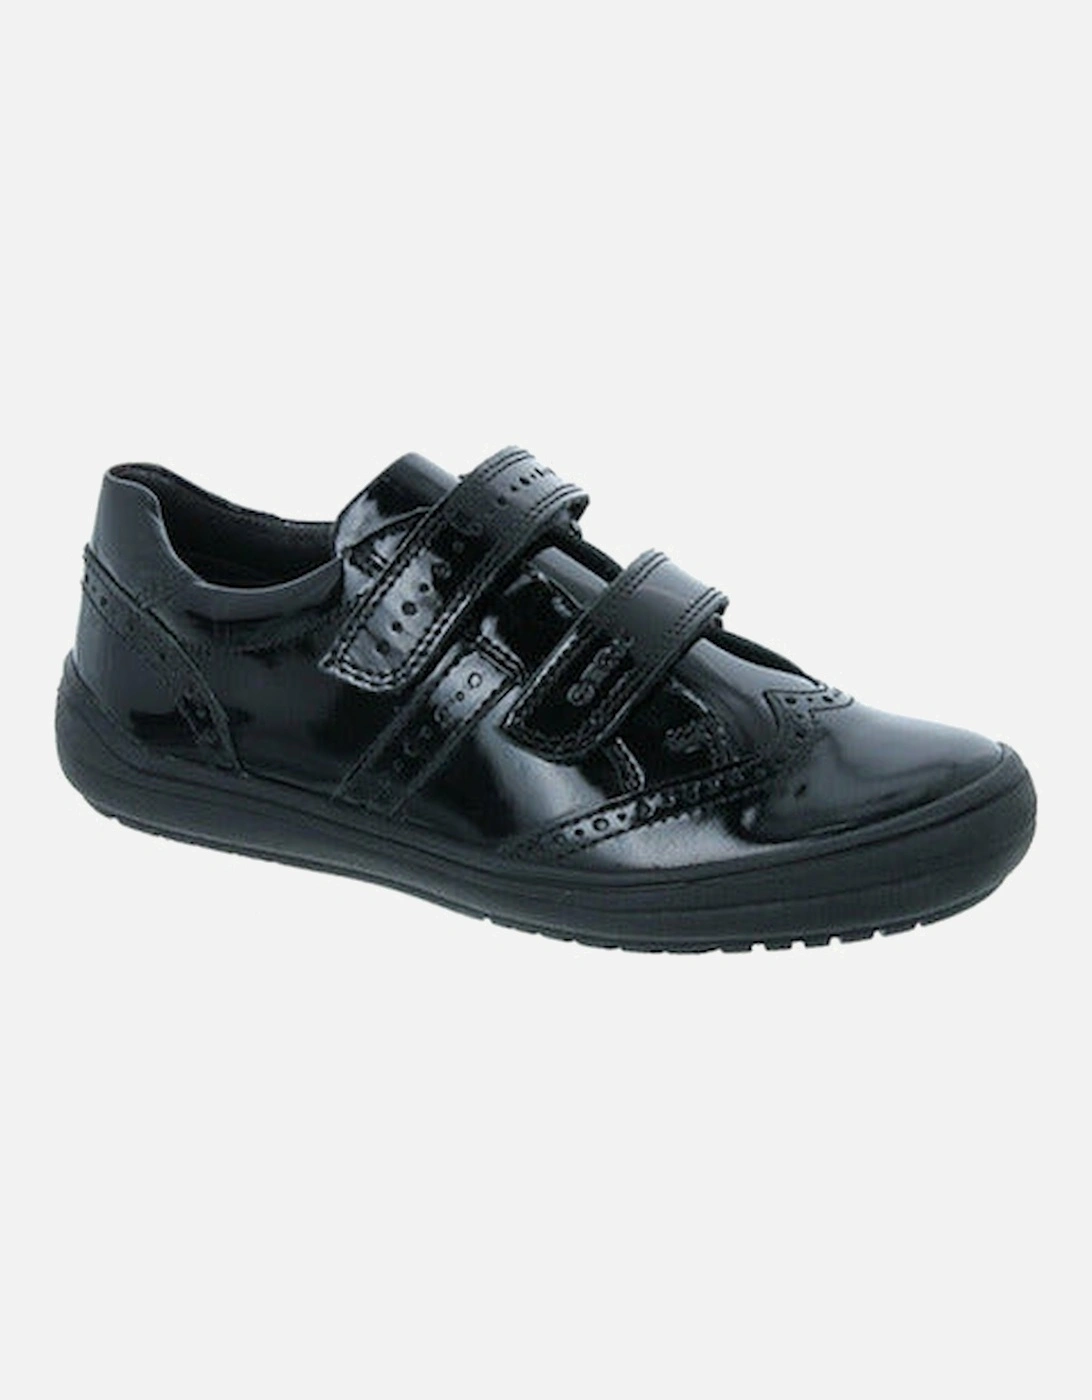 School Shoes HadrielJ947VG black patent, 2 of 1